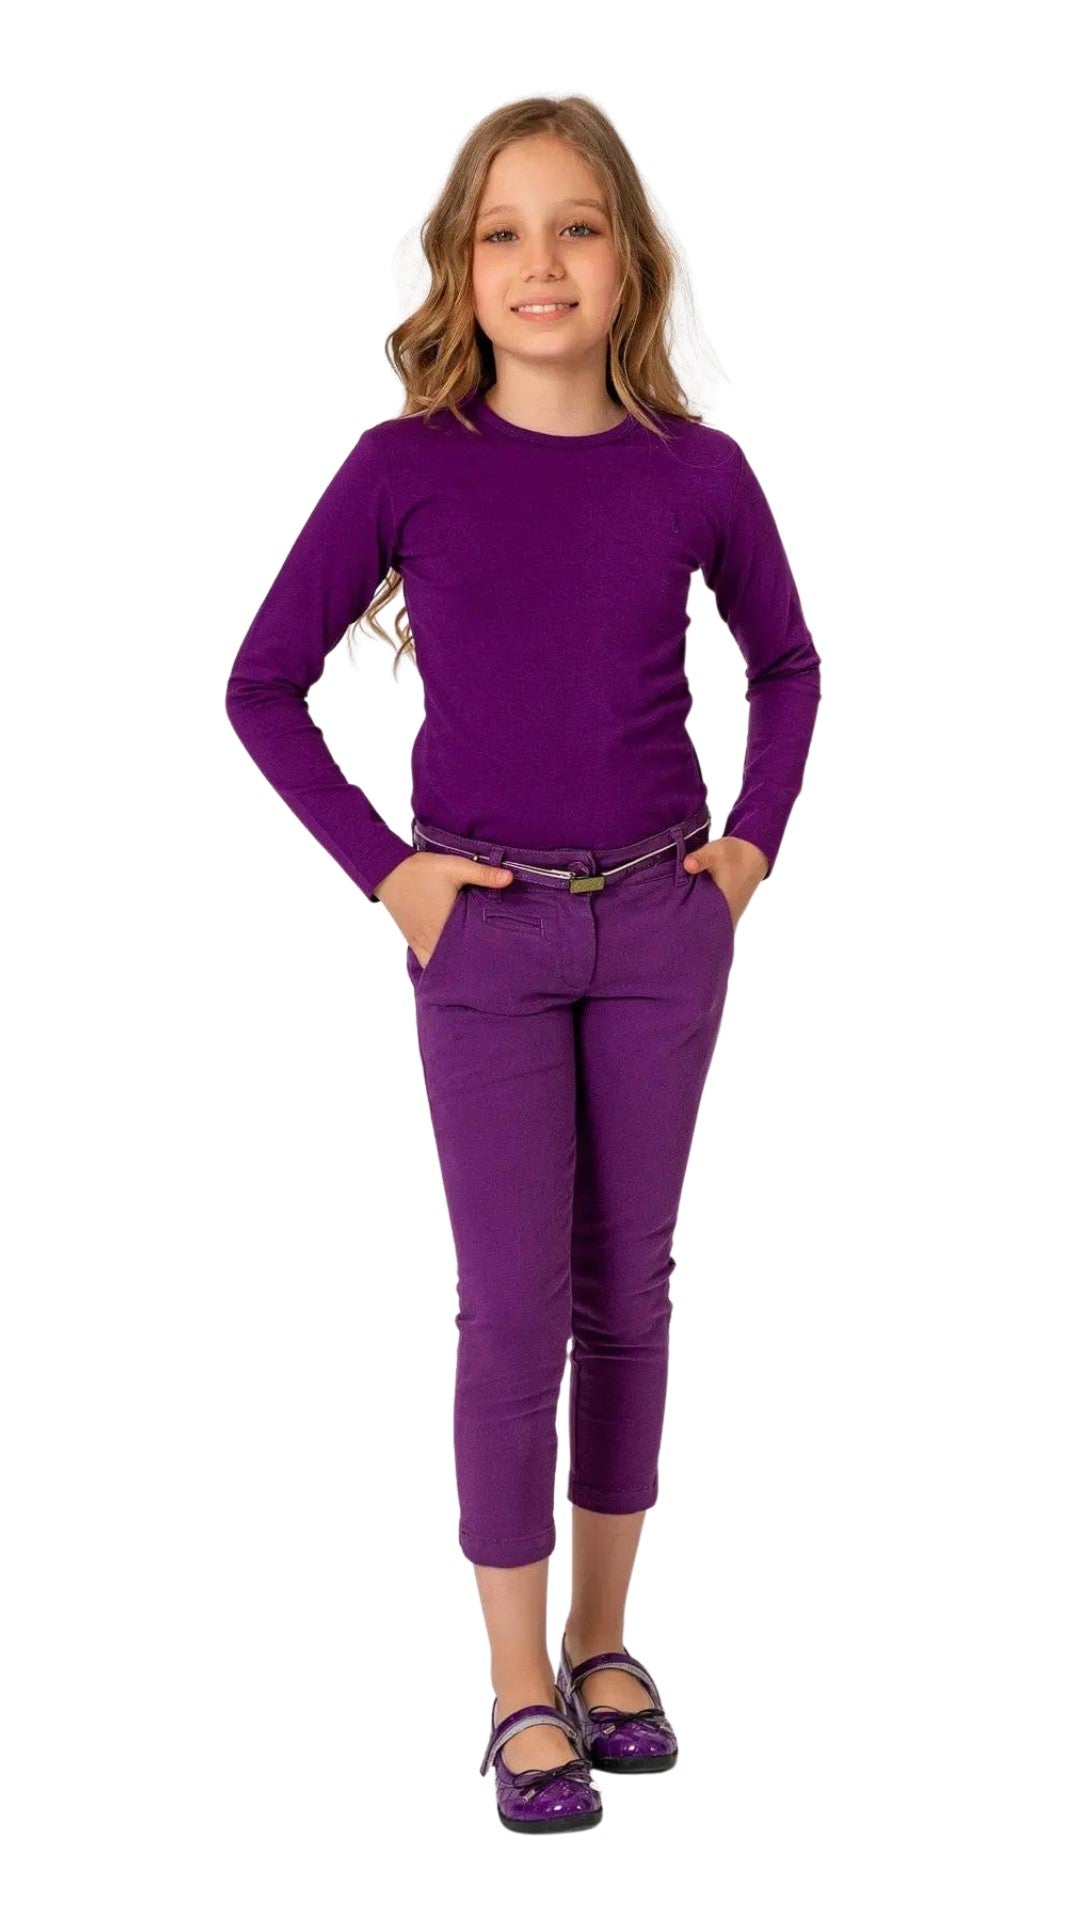 InCity Girls Tween 7-14 Years Regular Fit Purple Fuchsia Navy Black Crew Neck Casual Long Sleeve Comfy Ninova T-shirt InCity Boys & Girls